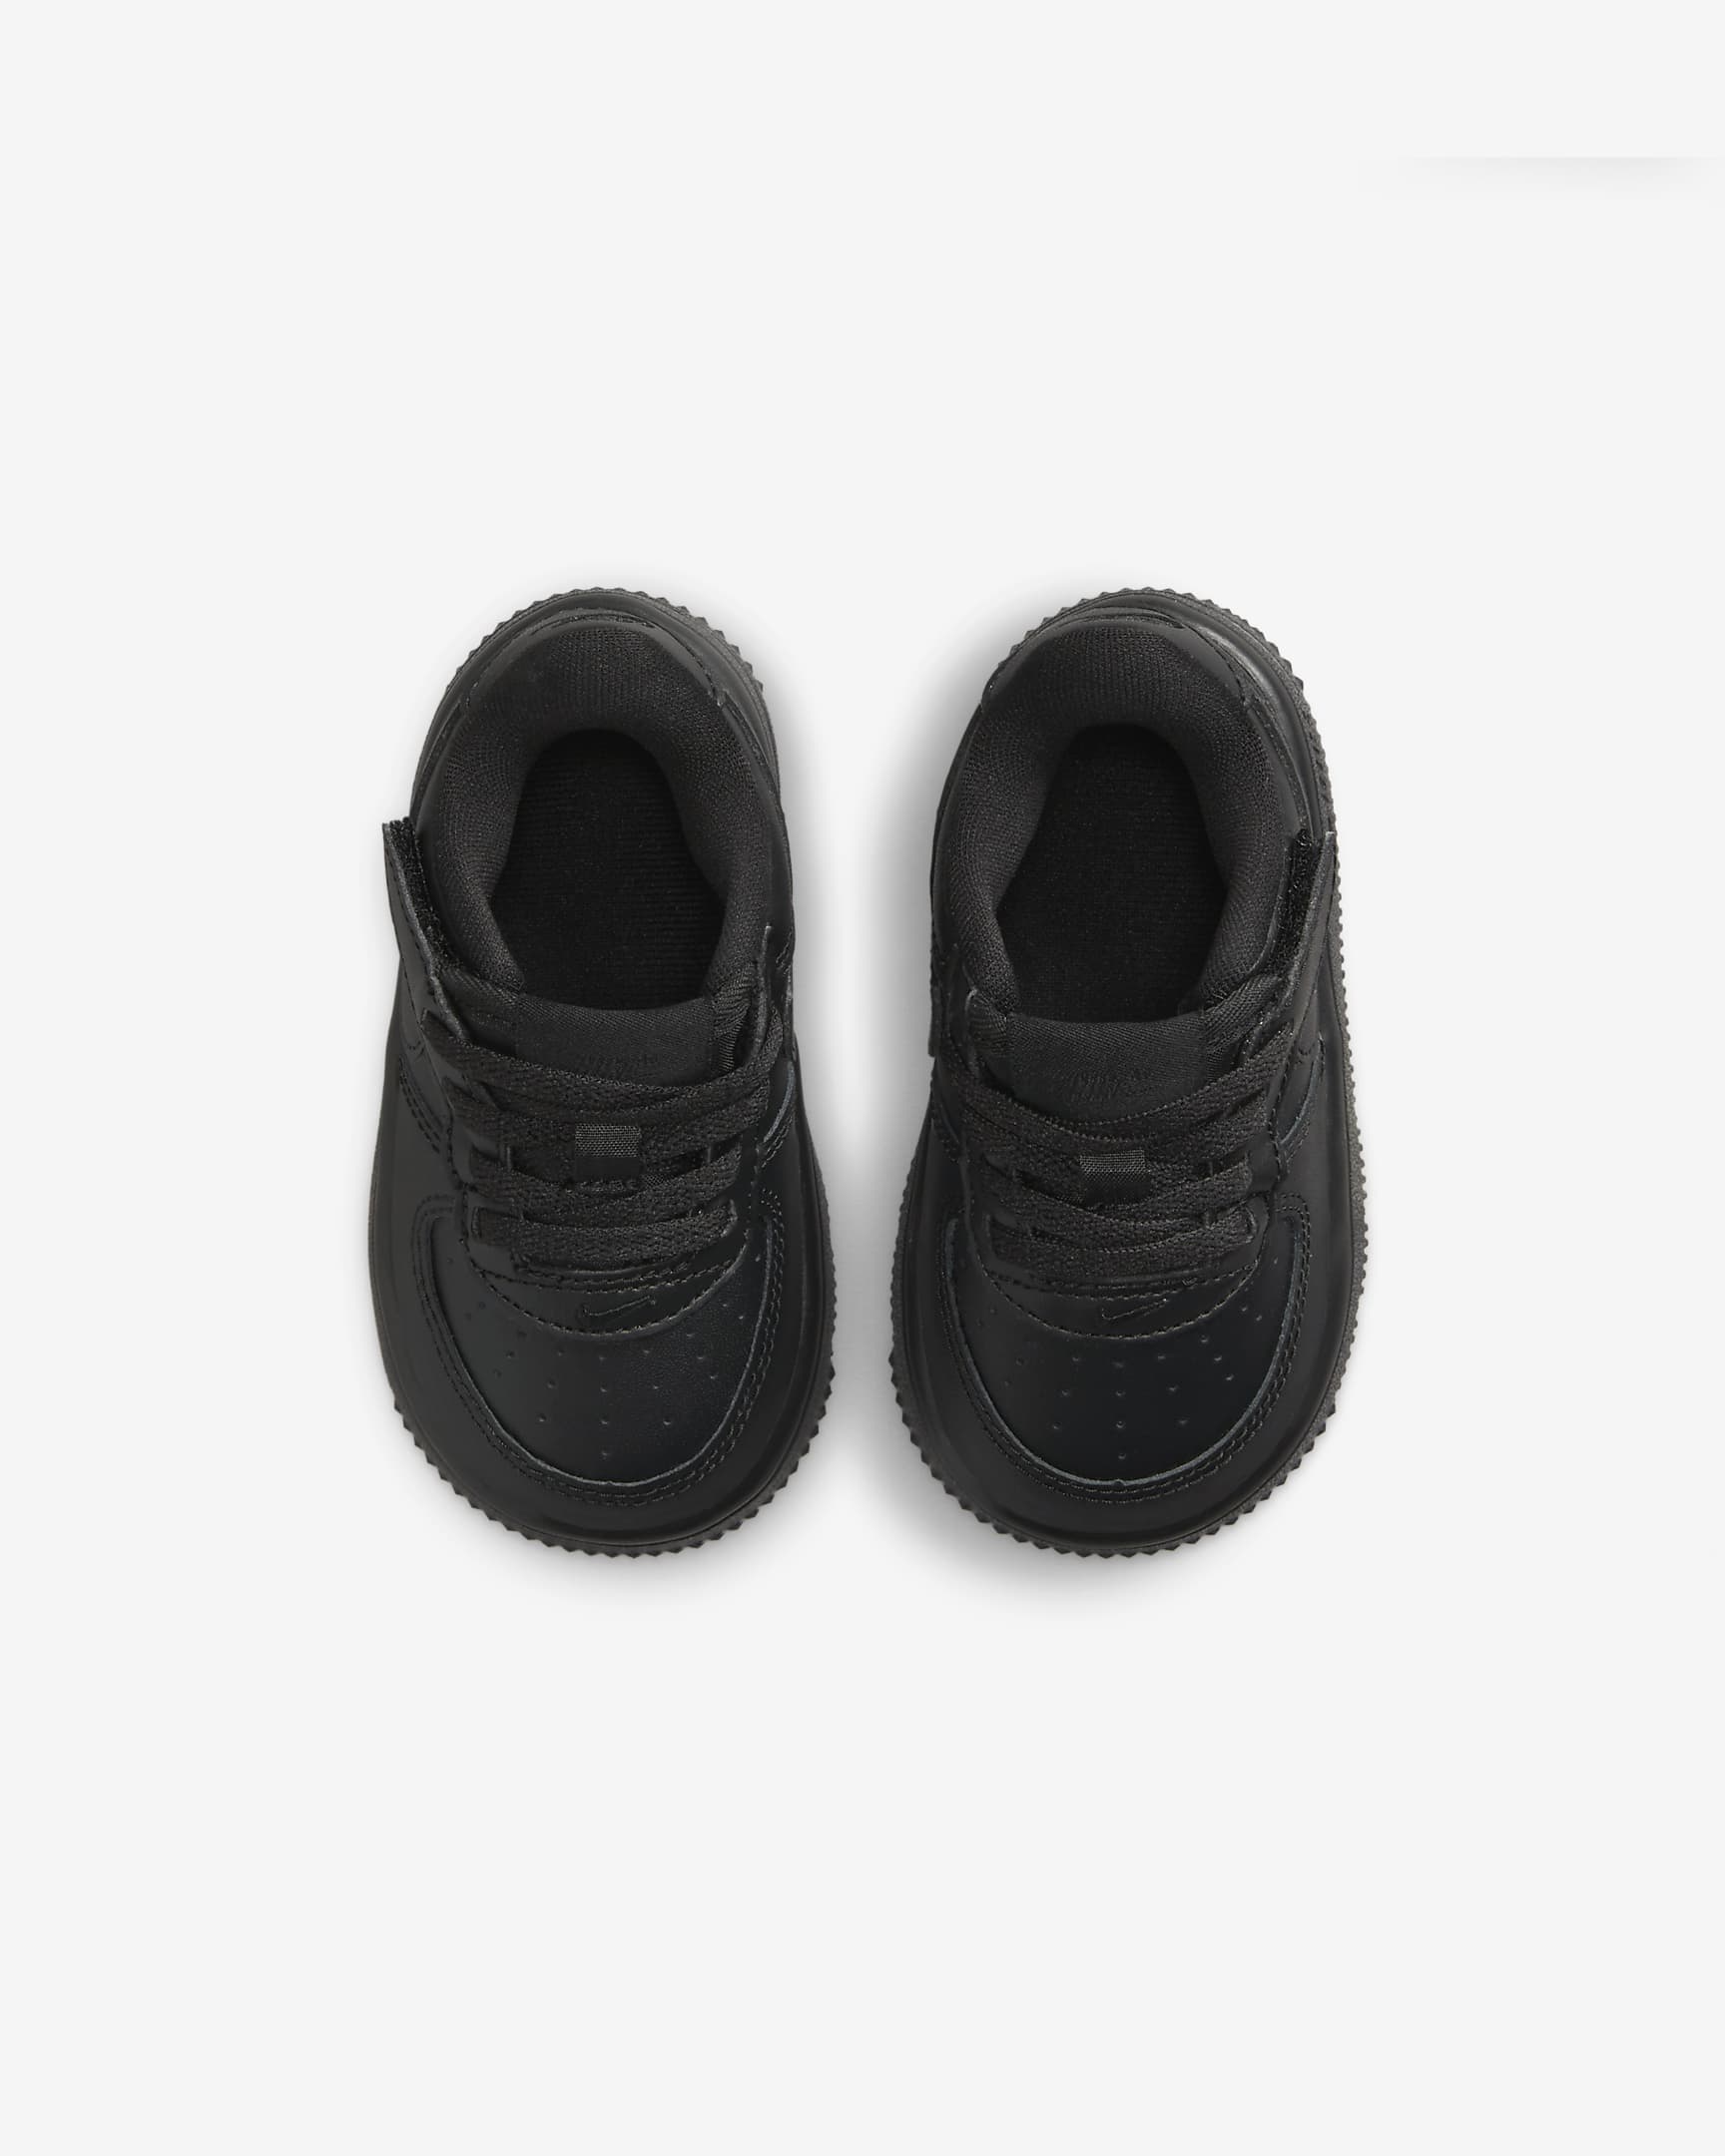 Nike Force 1 Low EasyOn Baby/Toddler Shoes - Black/Black/Black